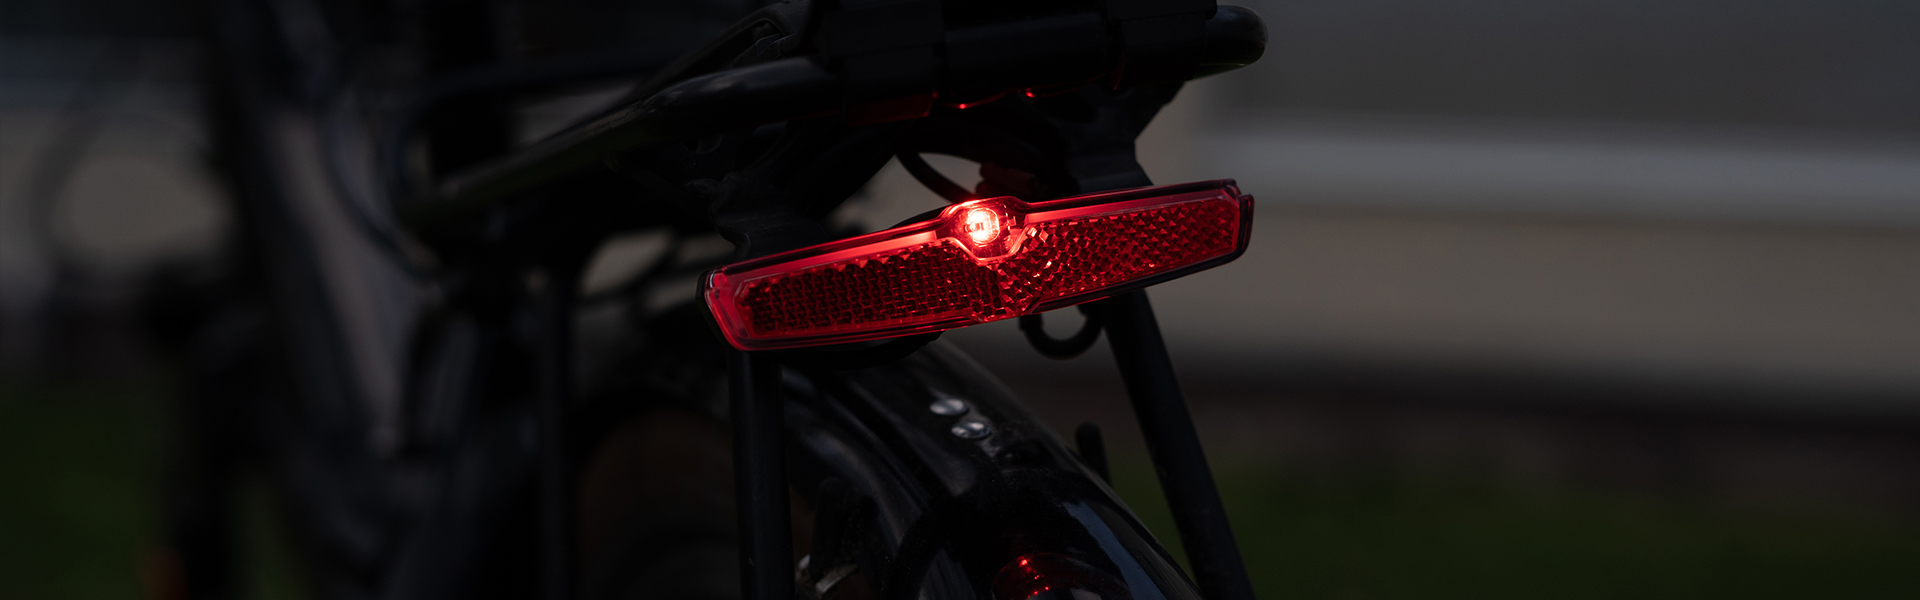 Sate-lite 30 LUX USB rechargeable bike light StVZO eletric bike front light CREE  LED waterproof